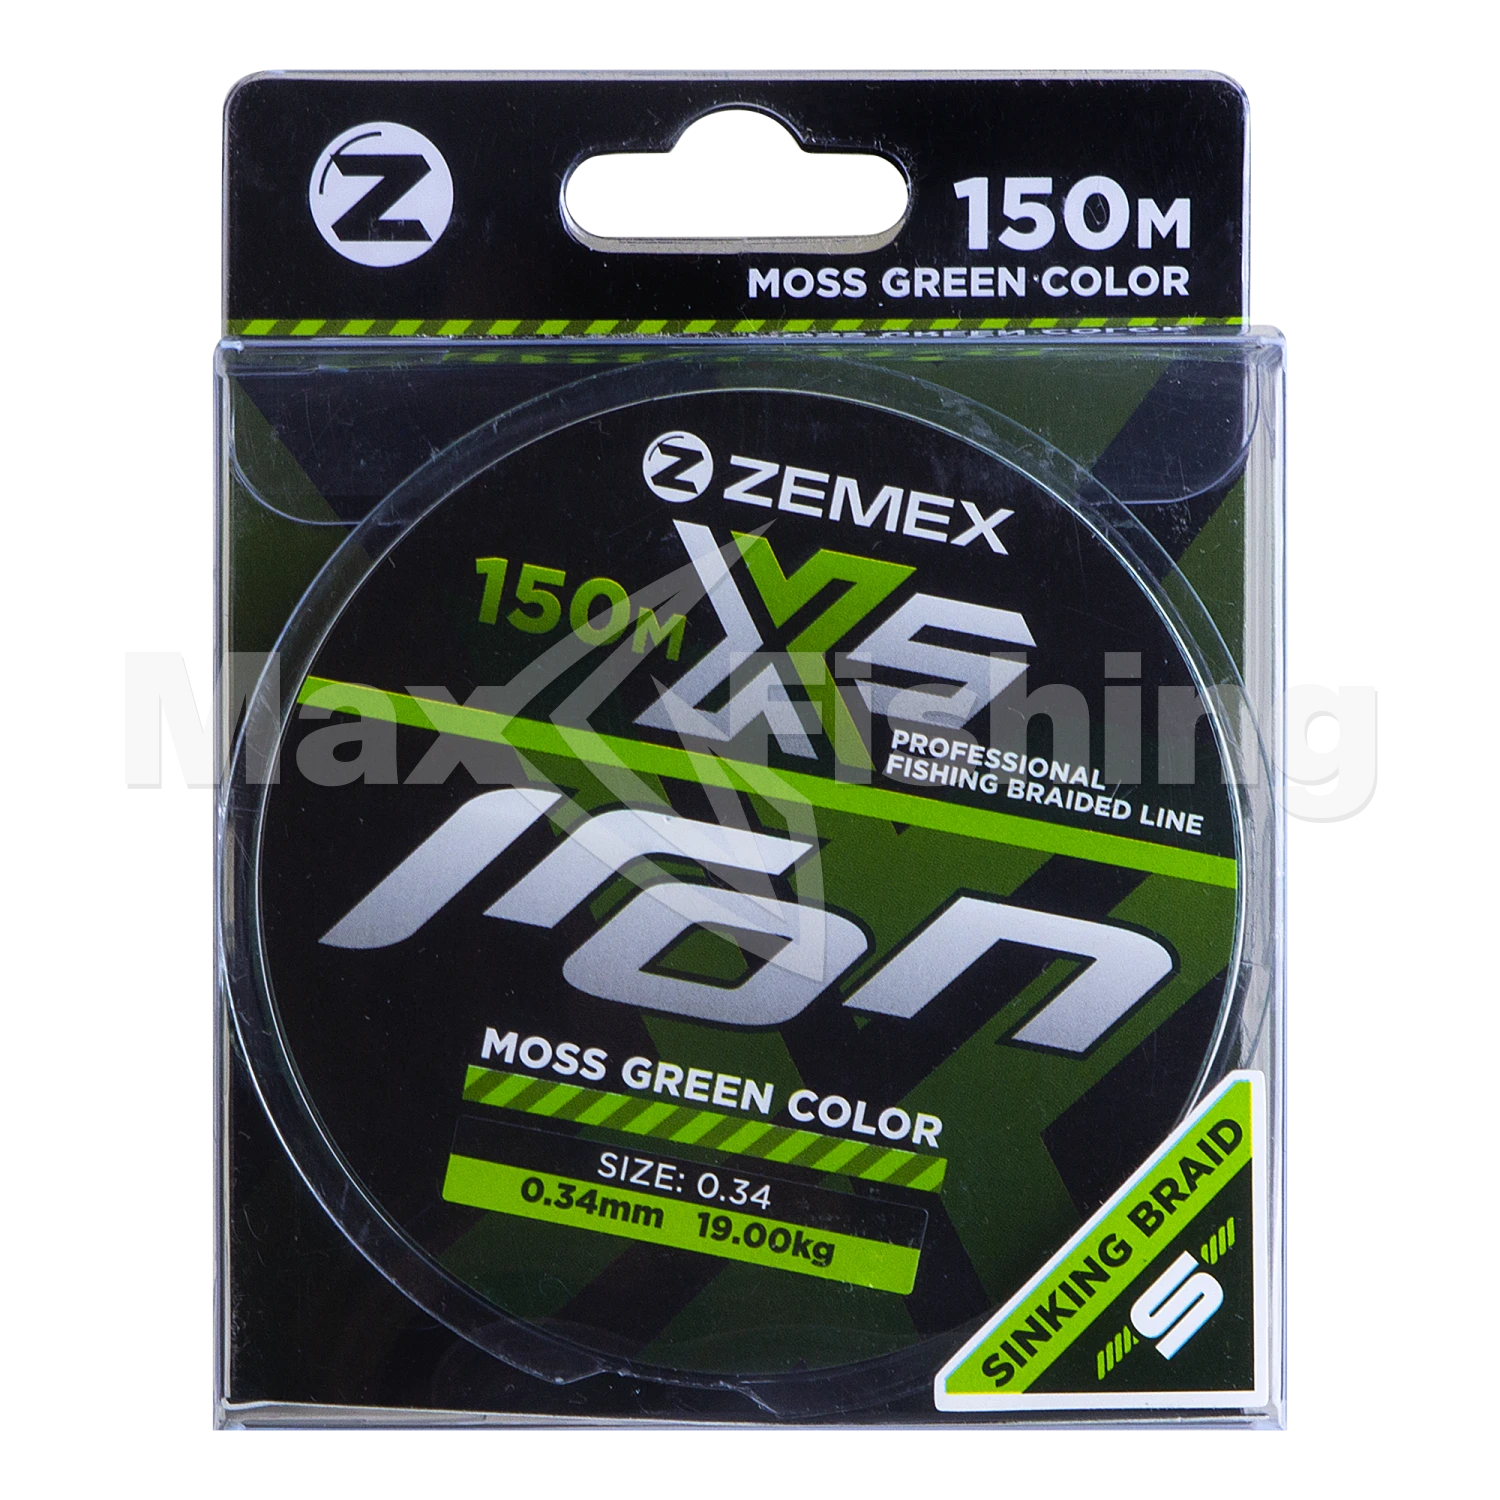 Шнур плетеный Zemex Iron X5 0,34мм 150м (moss green)